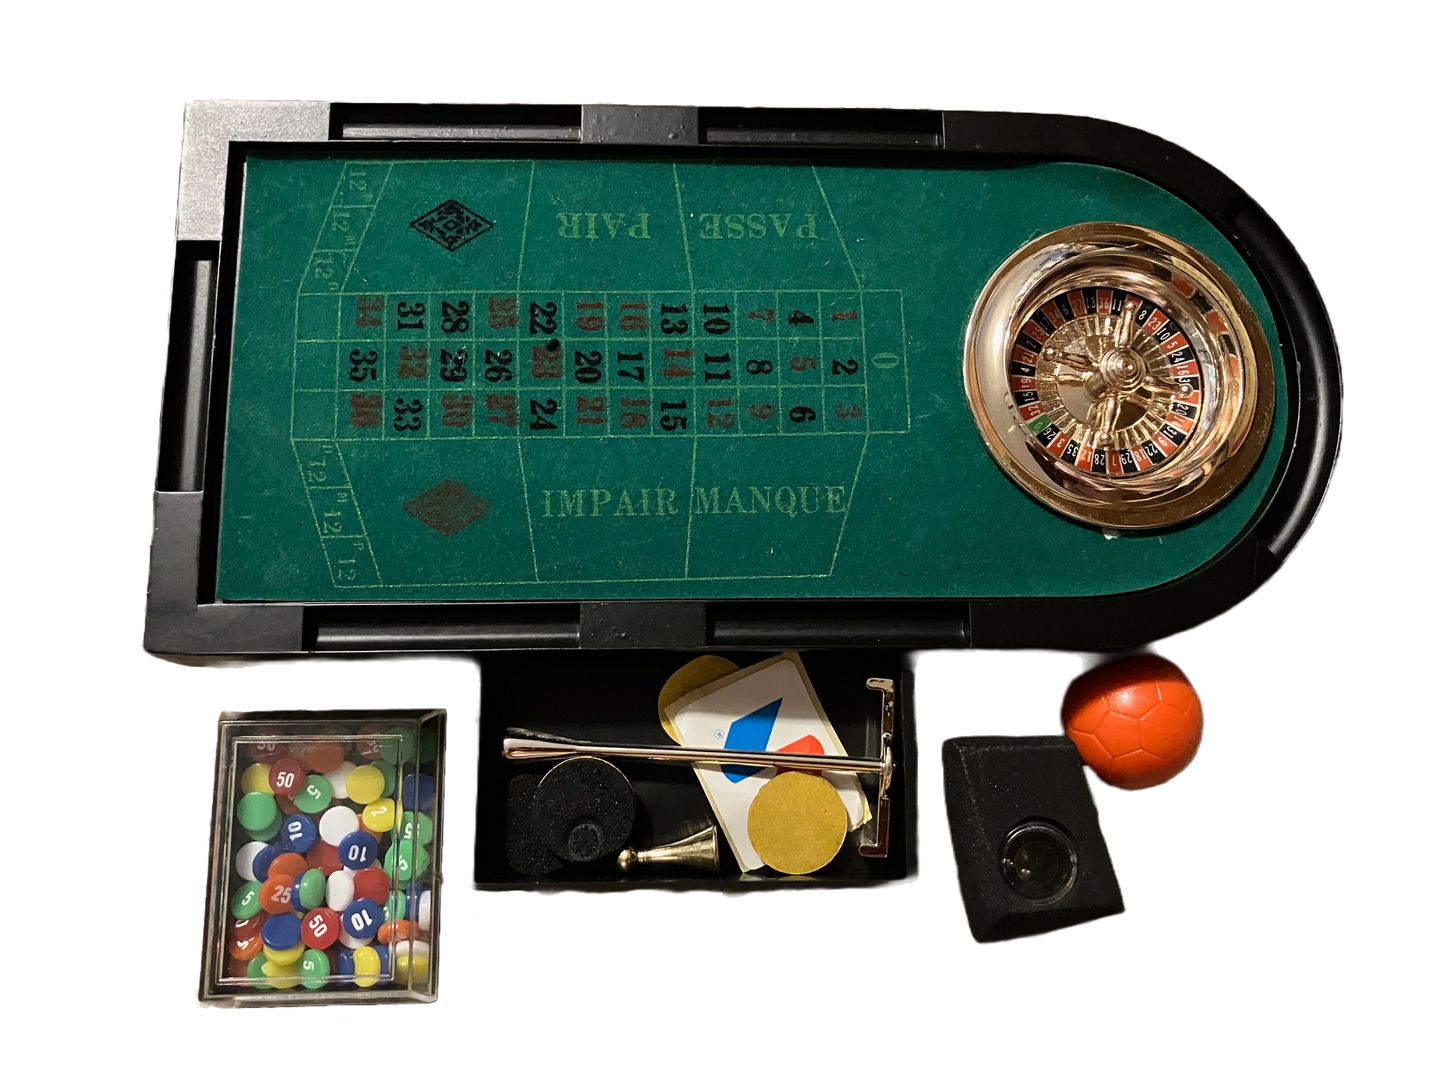 Executive Mini Roulette Vintage Game